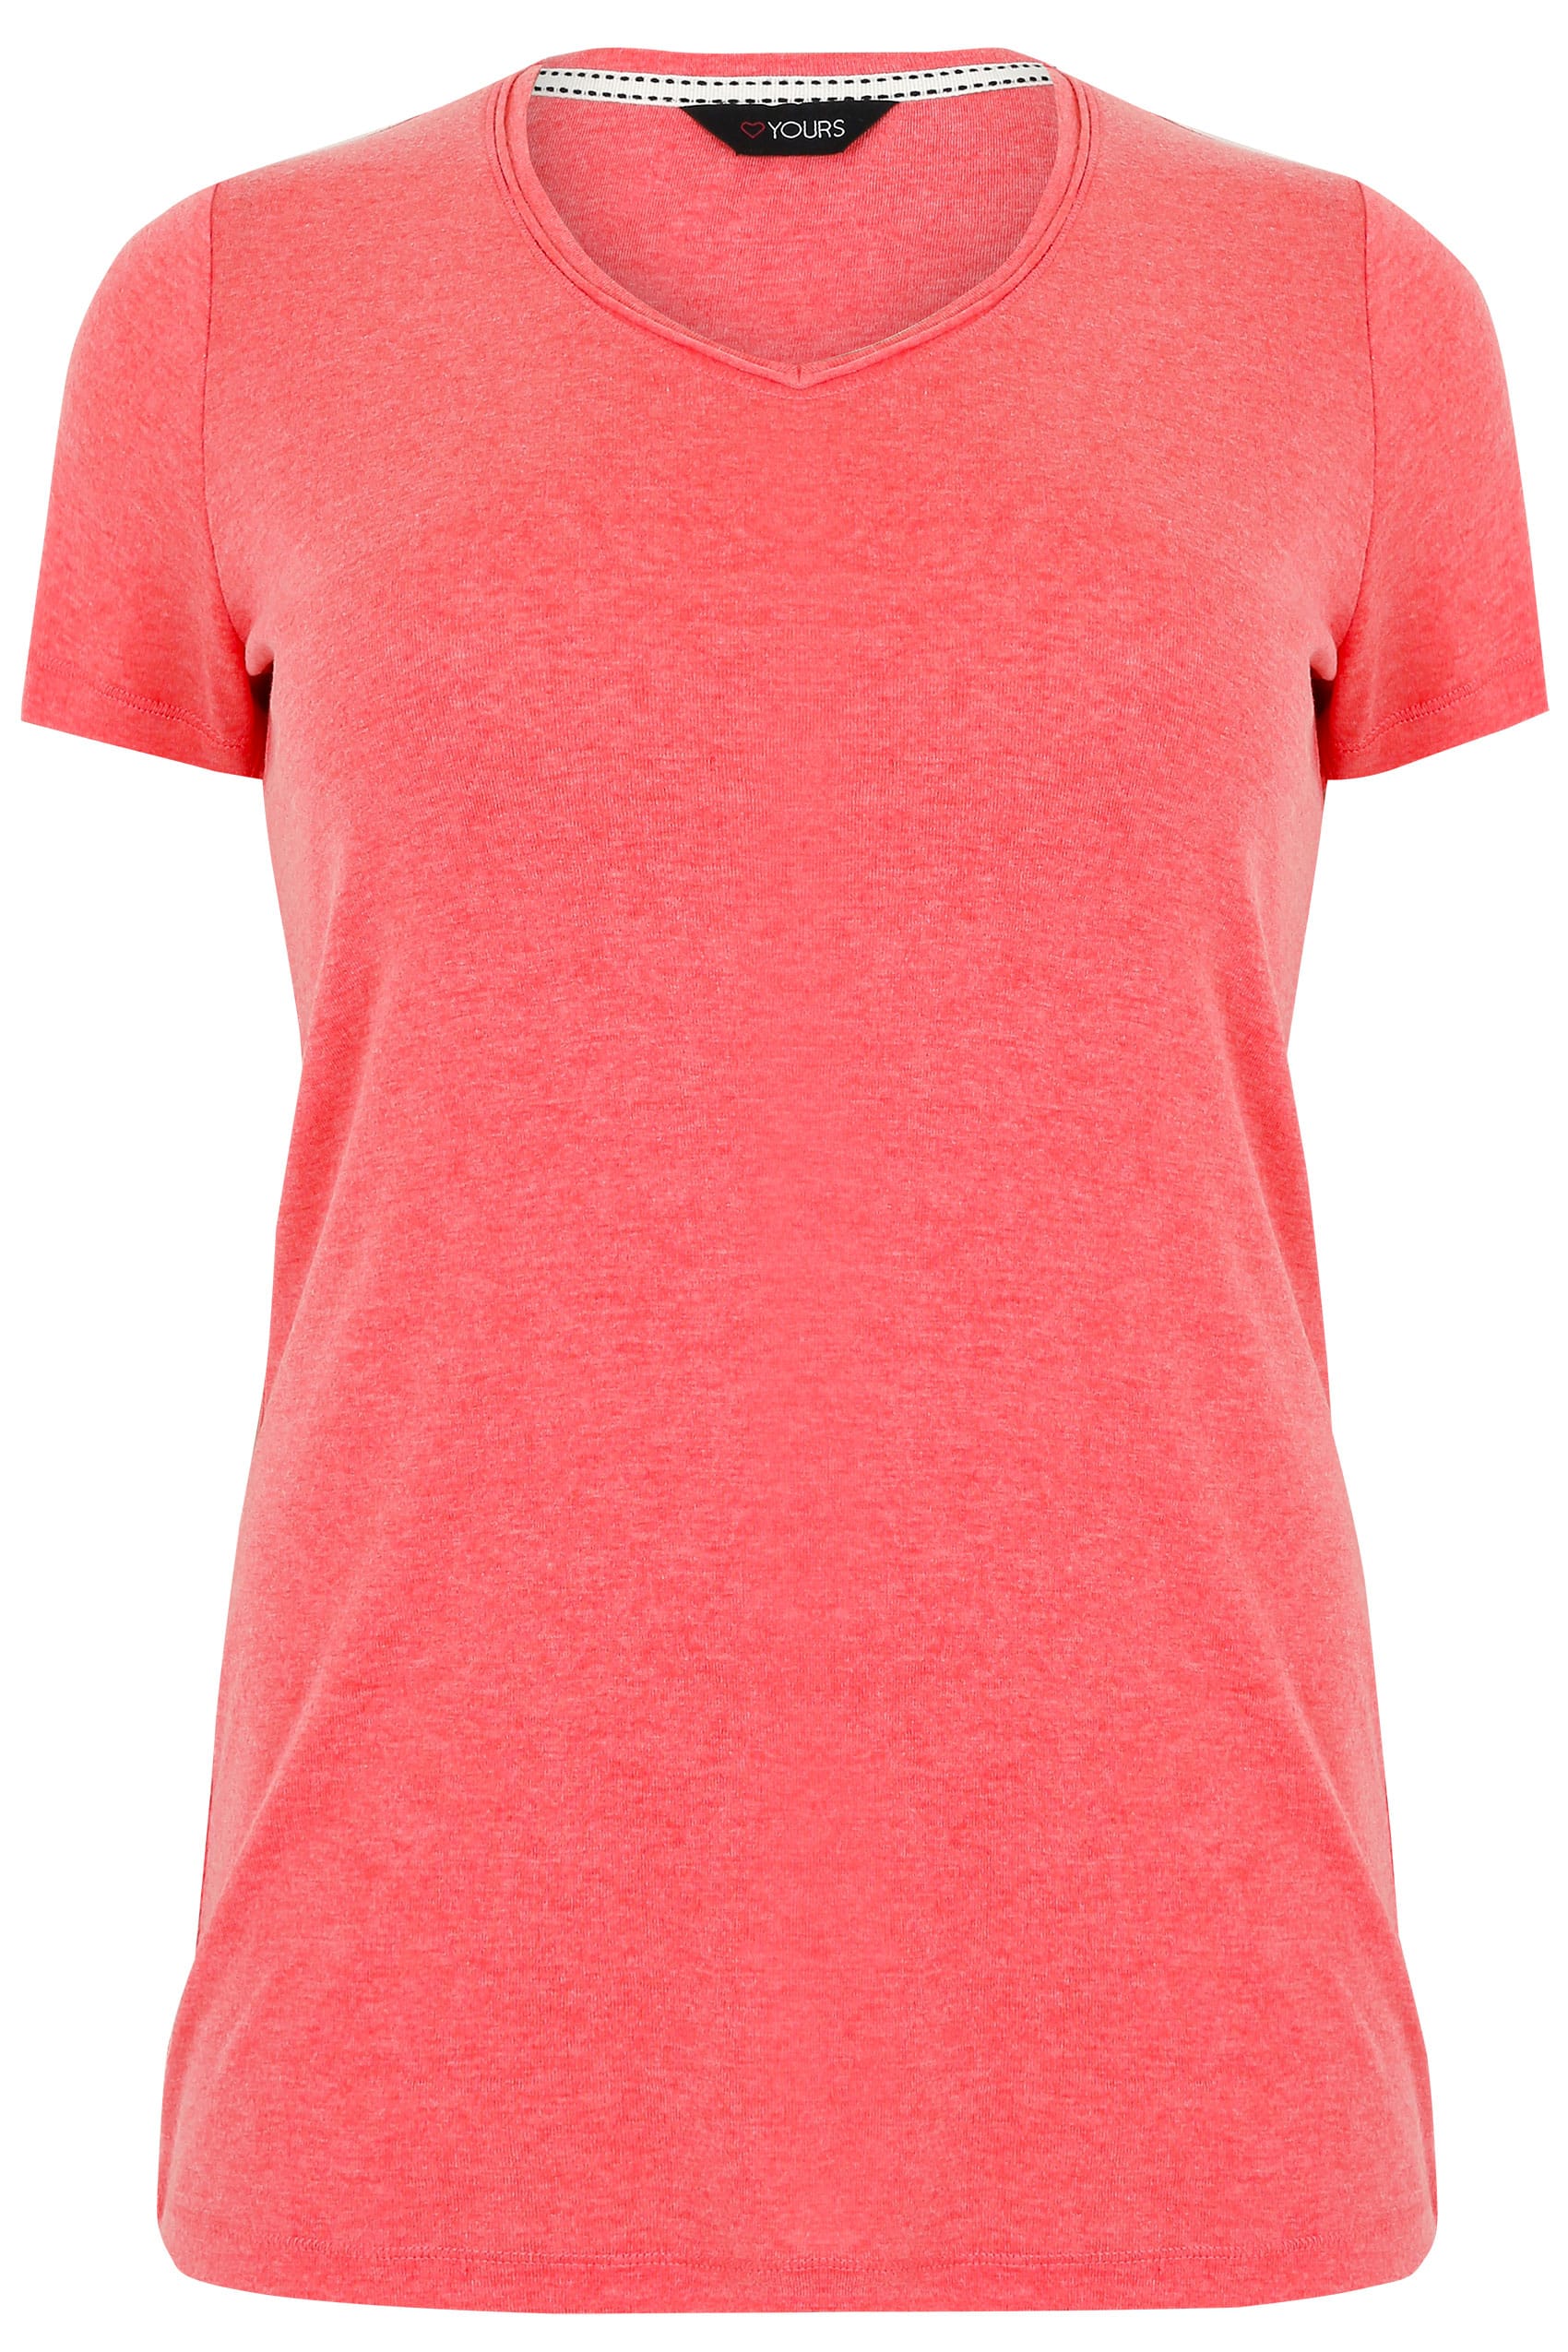 Dark Pink Marl Short Sleeved V-Neck Basic T-Shirt, Plus size 16 to 36